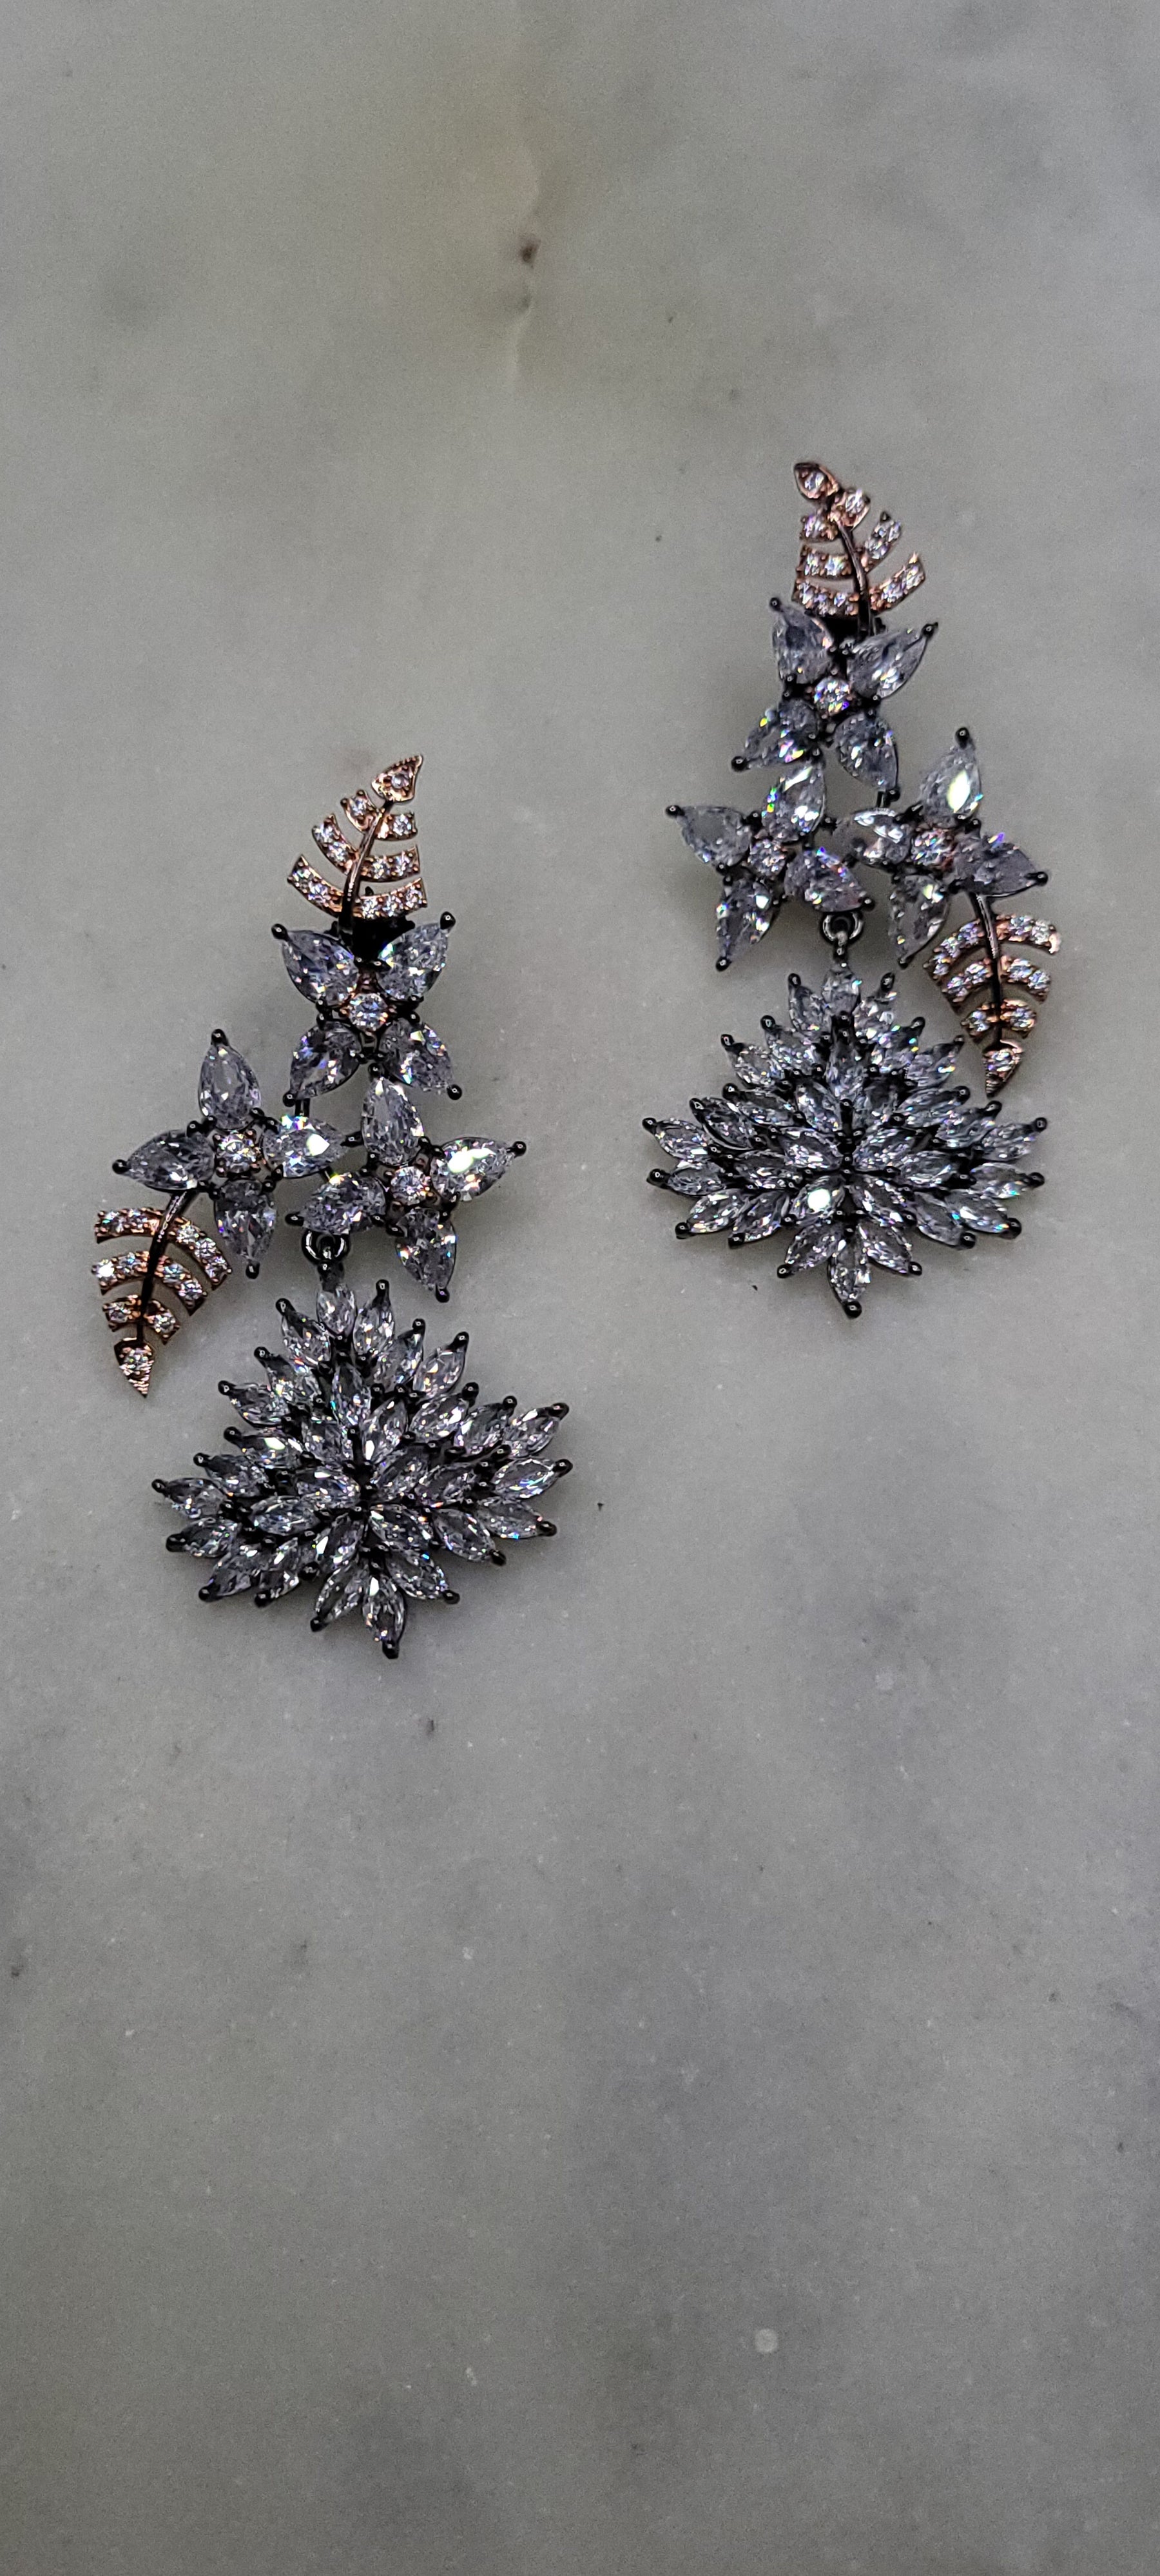 Beautiful two-toned earrings